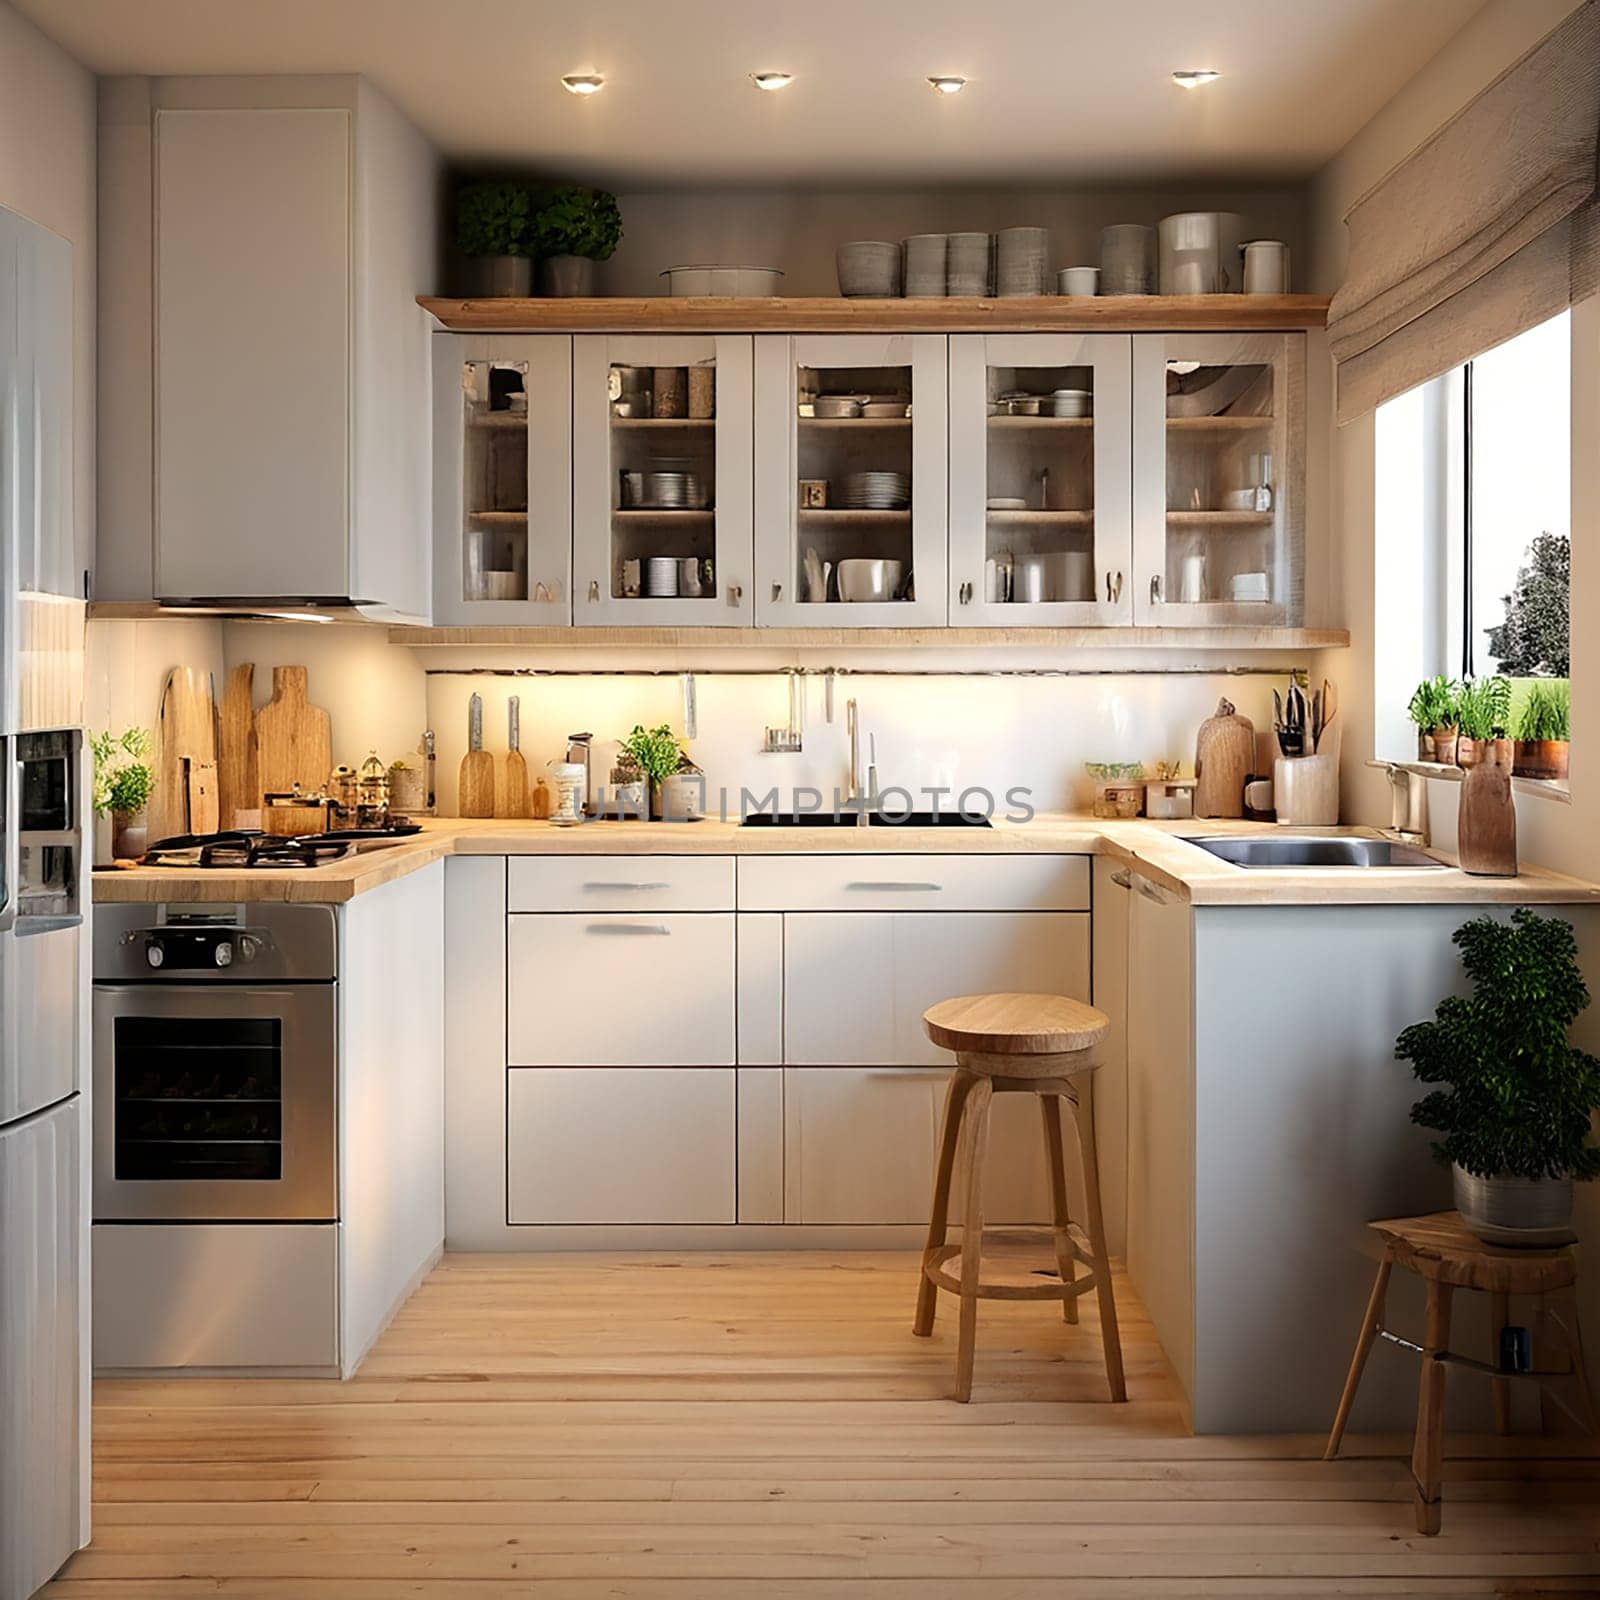 Savoring Simplicity: Designing a Minimalist Kitchen Retreat by Petrichor